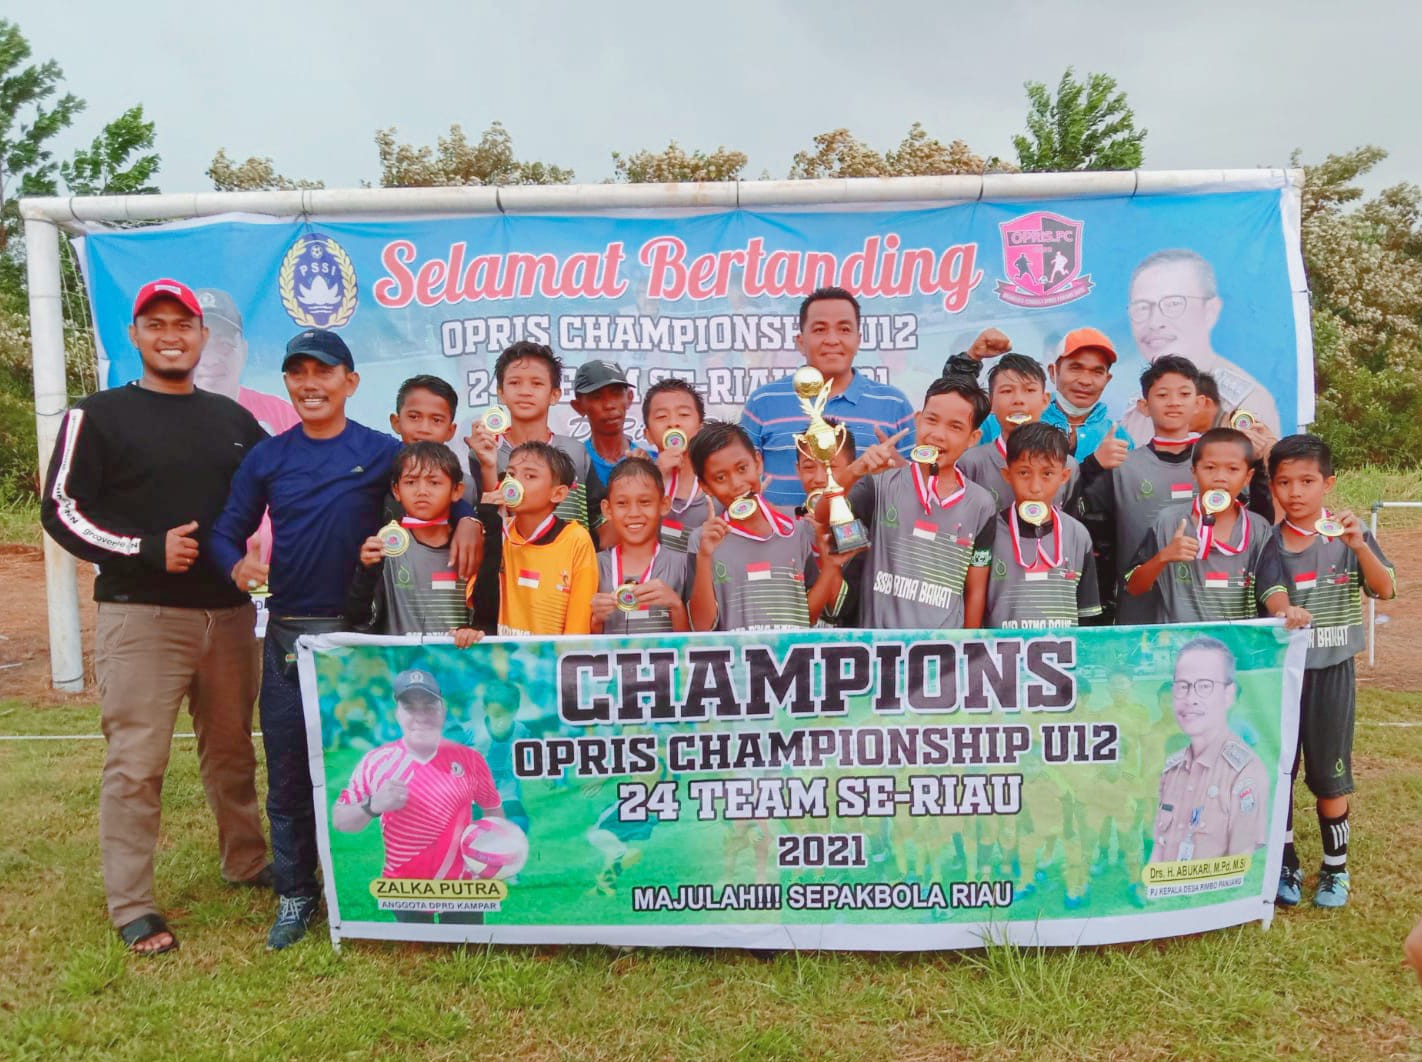 SSB Bina Bakat Juara Turnamen Opris Championship  U12 2021